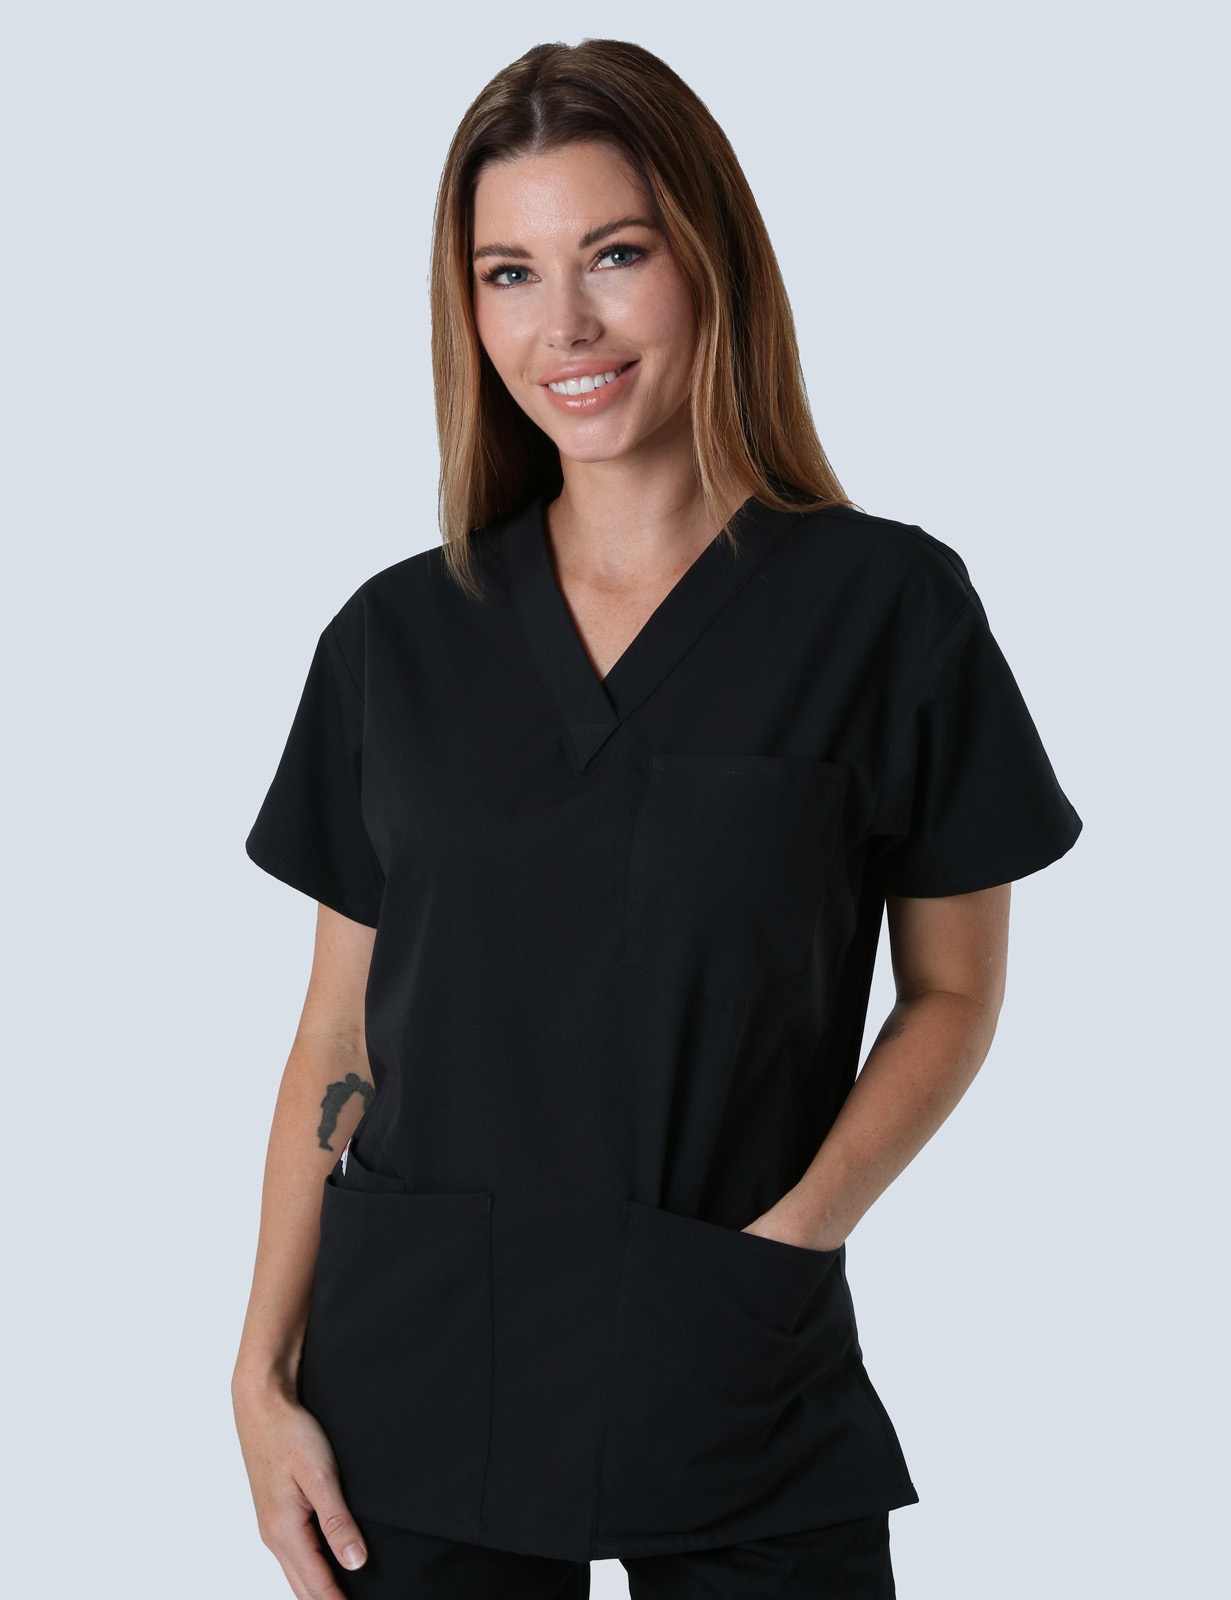 Logan Hospital - Medical Imaging Nurse (4 Pocket Scrub Top and Cargo Pants in Black incl Logos)